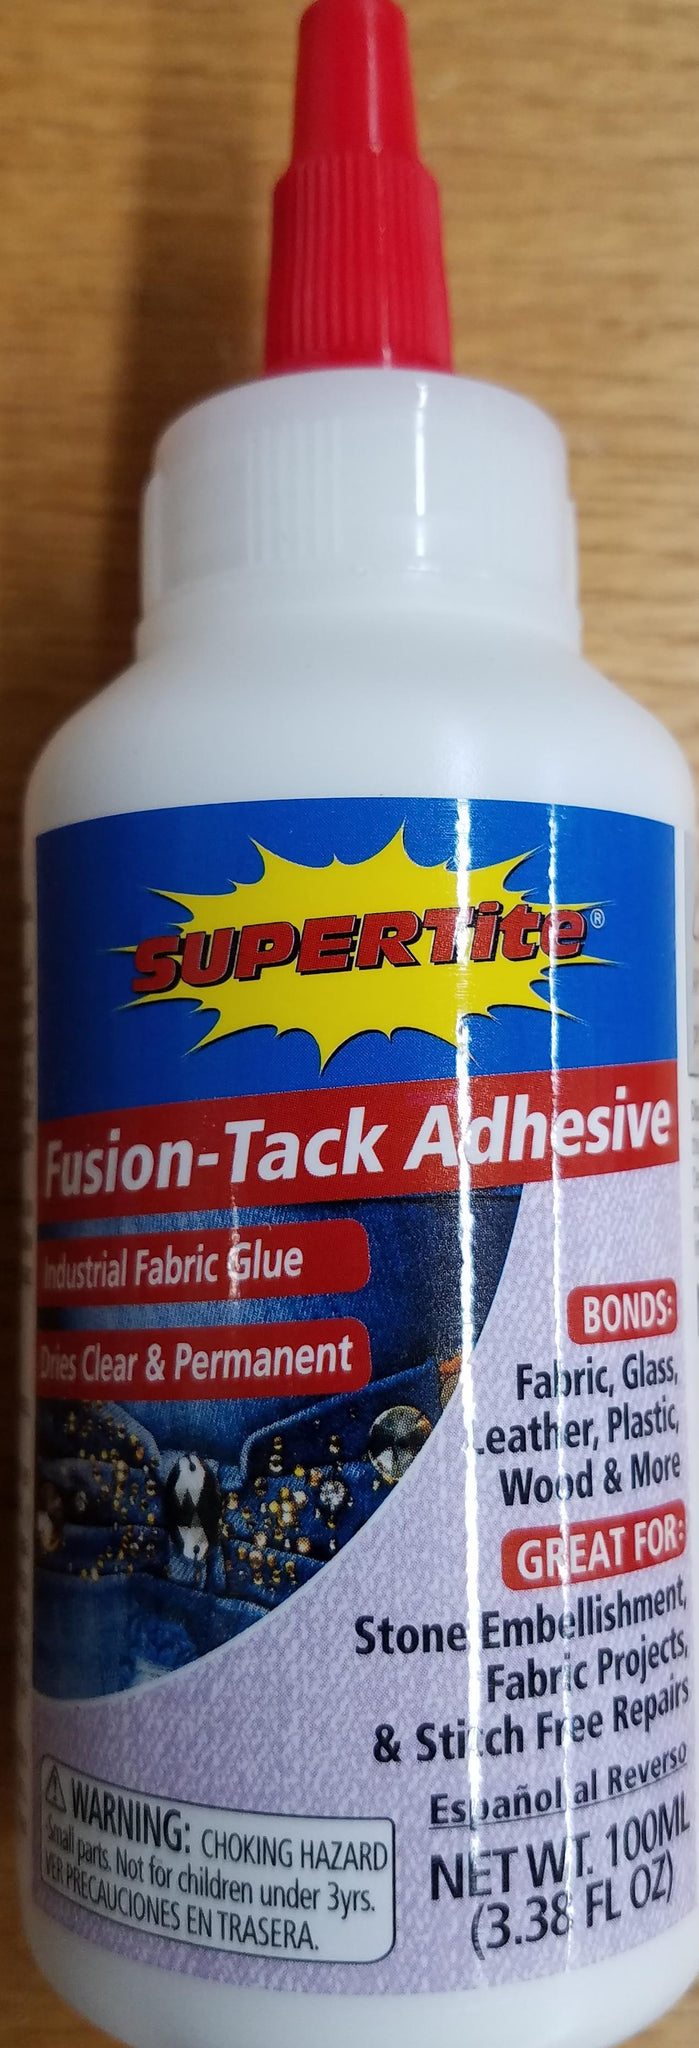 Ref-1159 Supertite Fusion-Tack Adhesive- 100ml (3.38oz)- Bottle